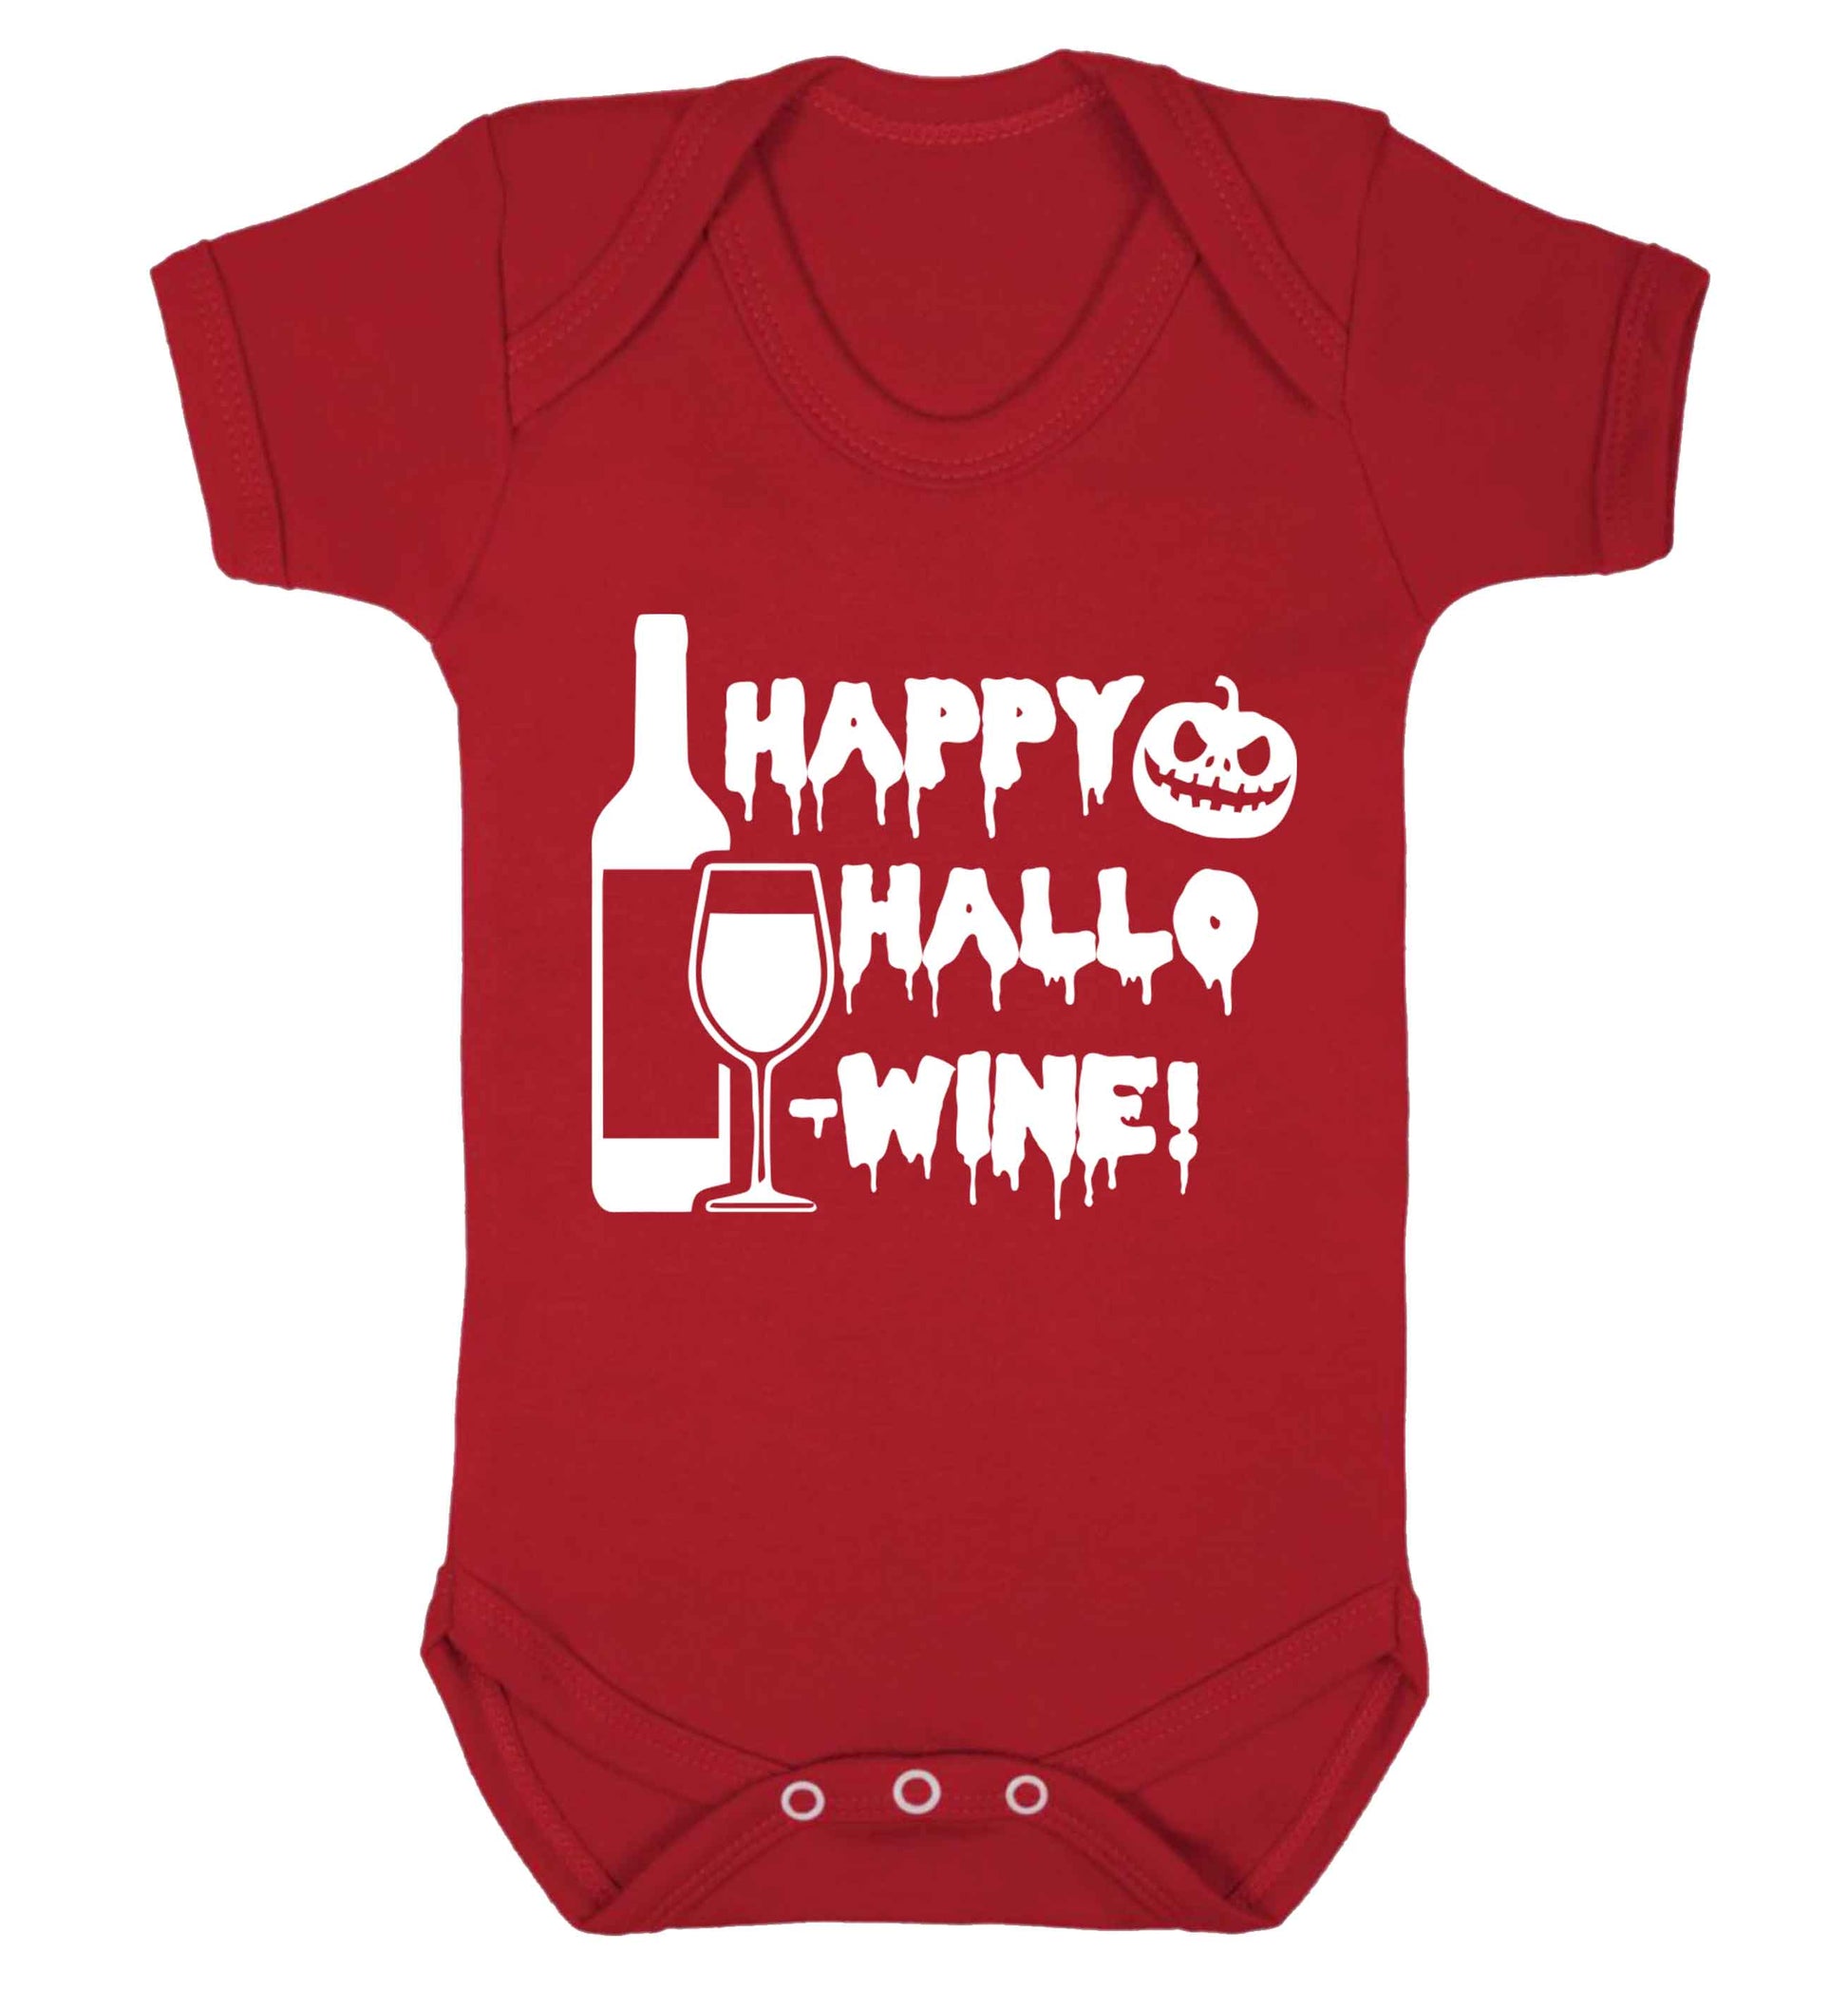 Happy hallow-wine Baby Vest red 18-24 months